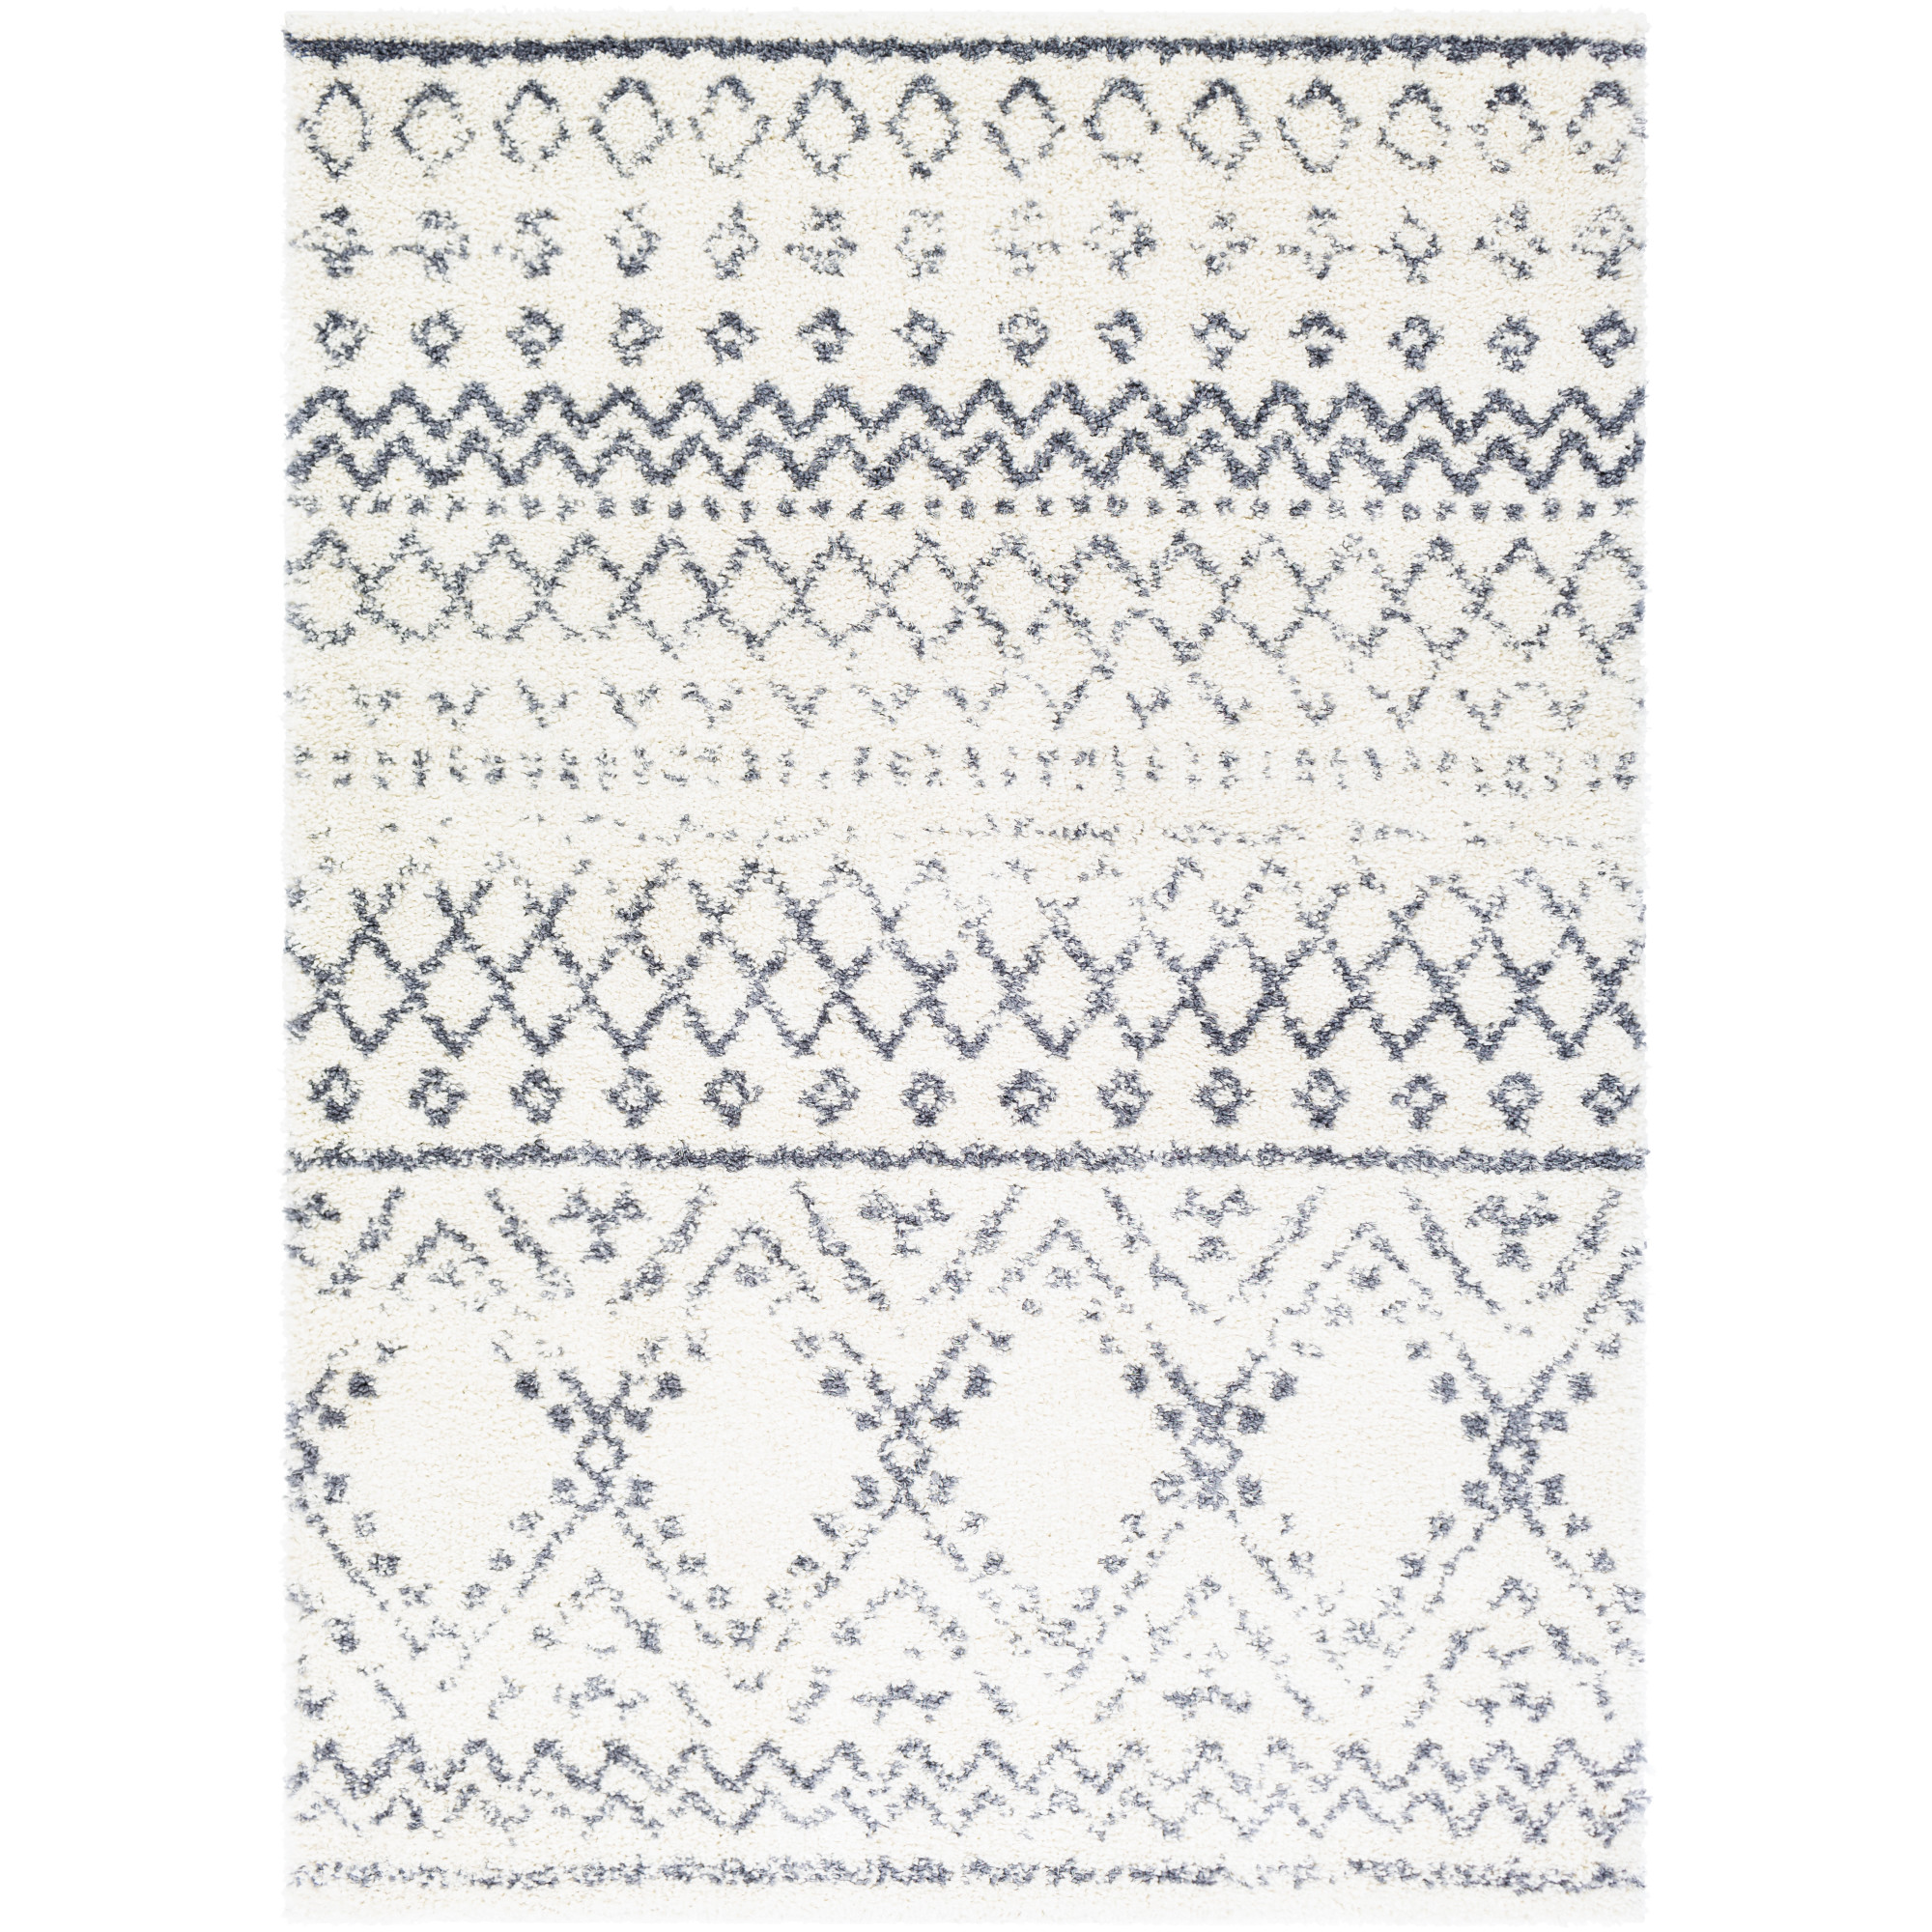 Artistic Weavers Maroc Shag Tribal Area Rug, White ,5'3" x 7'3" - image 1 of 8